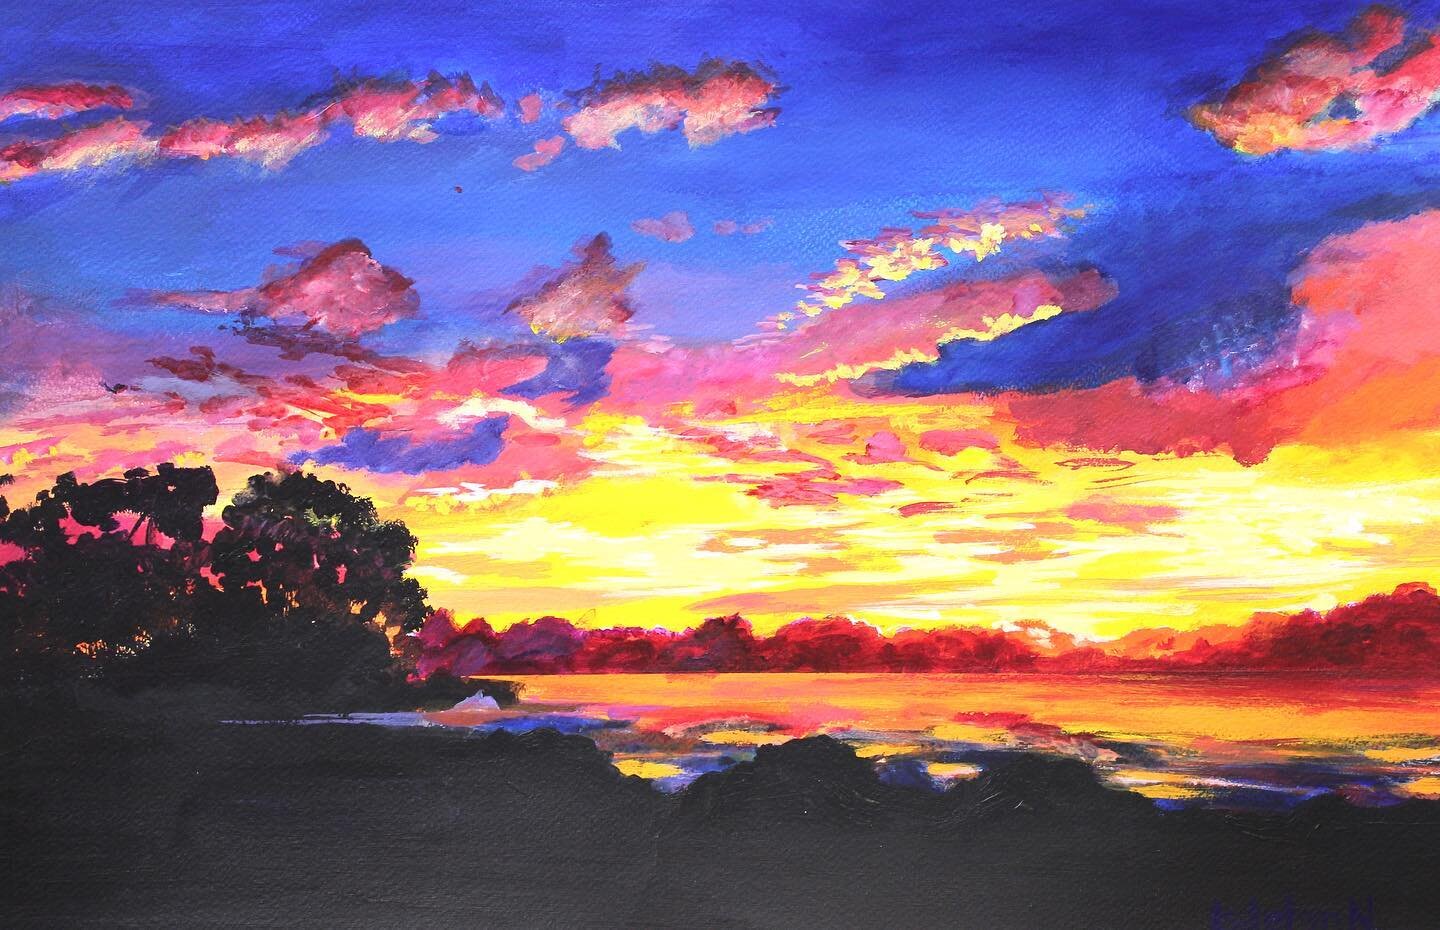 &ldquo;Sunset&rdquo; Acrylic Painting
Artist: Katelyn Nevenner, age 11
.
.
.
#acrylic #painting #acrylicpainting #instaart #art #artclass #artstudent #utahart #utahartist #sydneybowmanartclass #sunset #landscape #beautiful #sunsetpainting